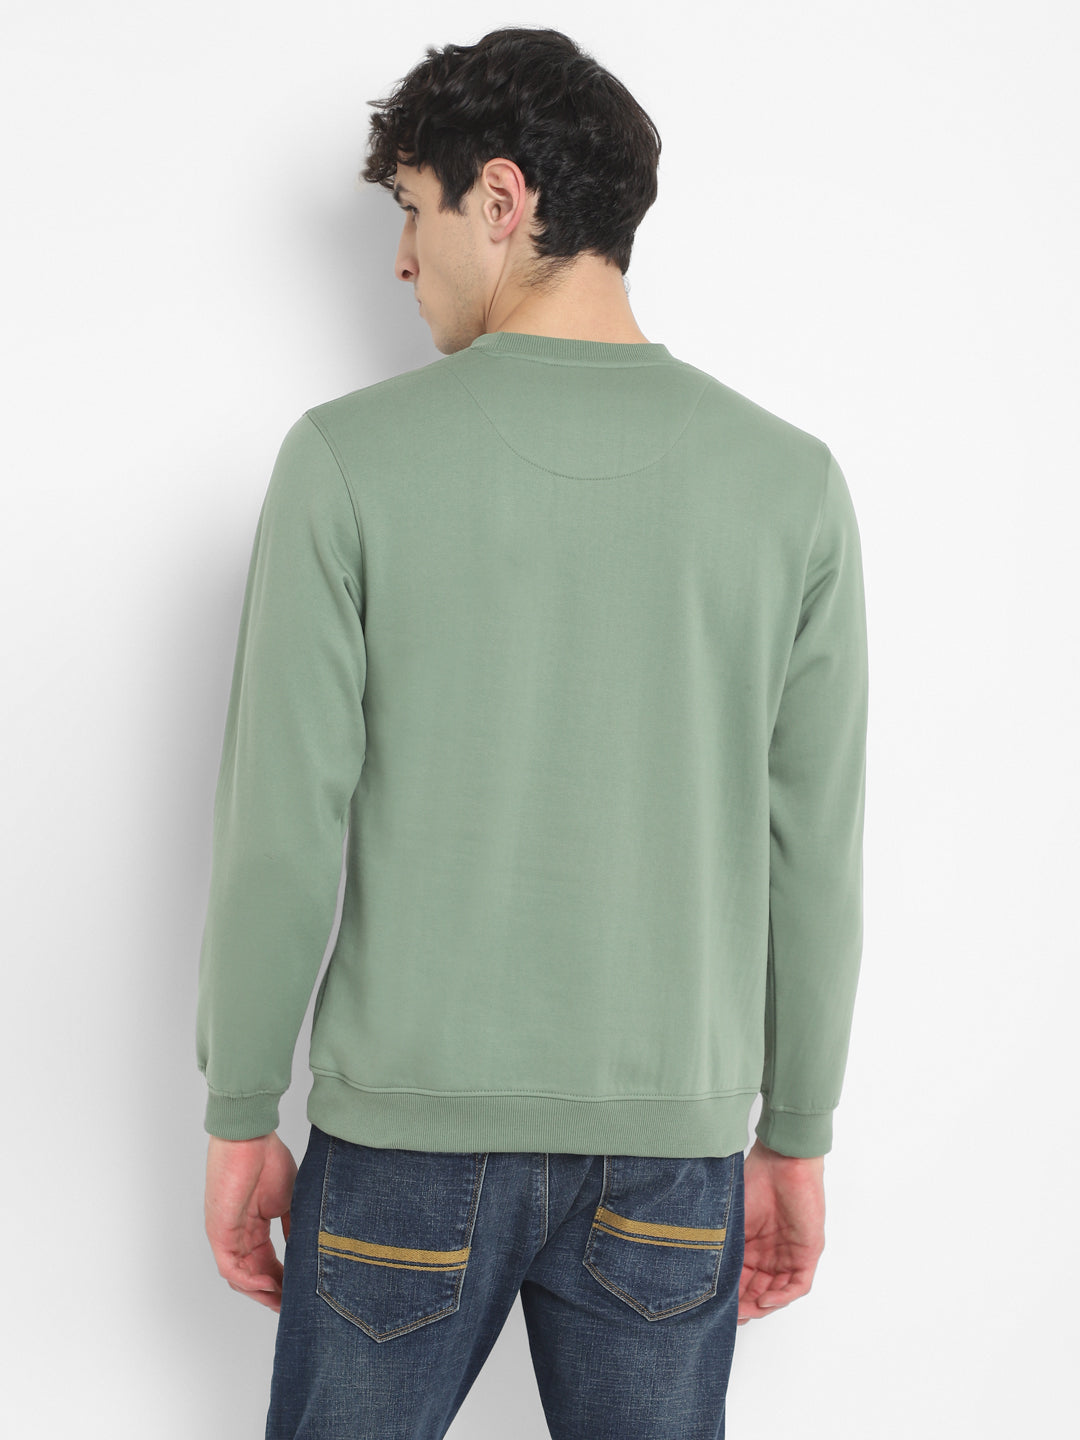 Round Neck Sweatshirt For Men - Hedge Green